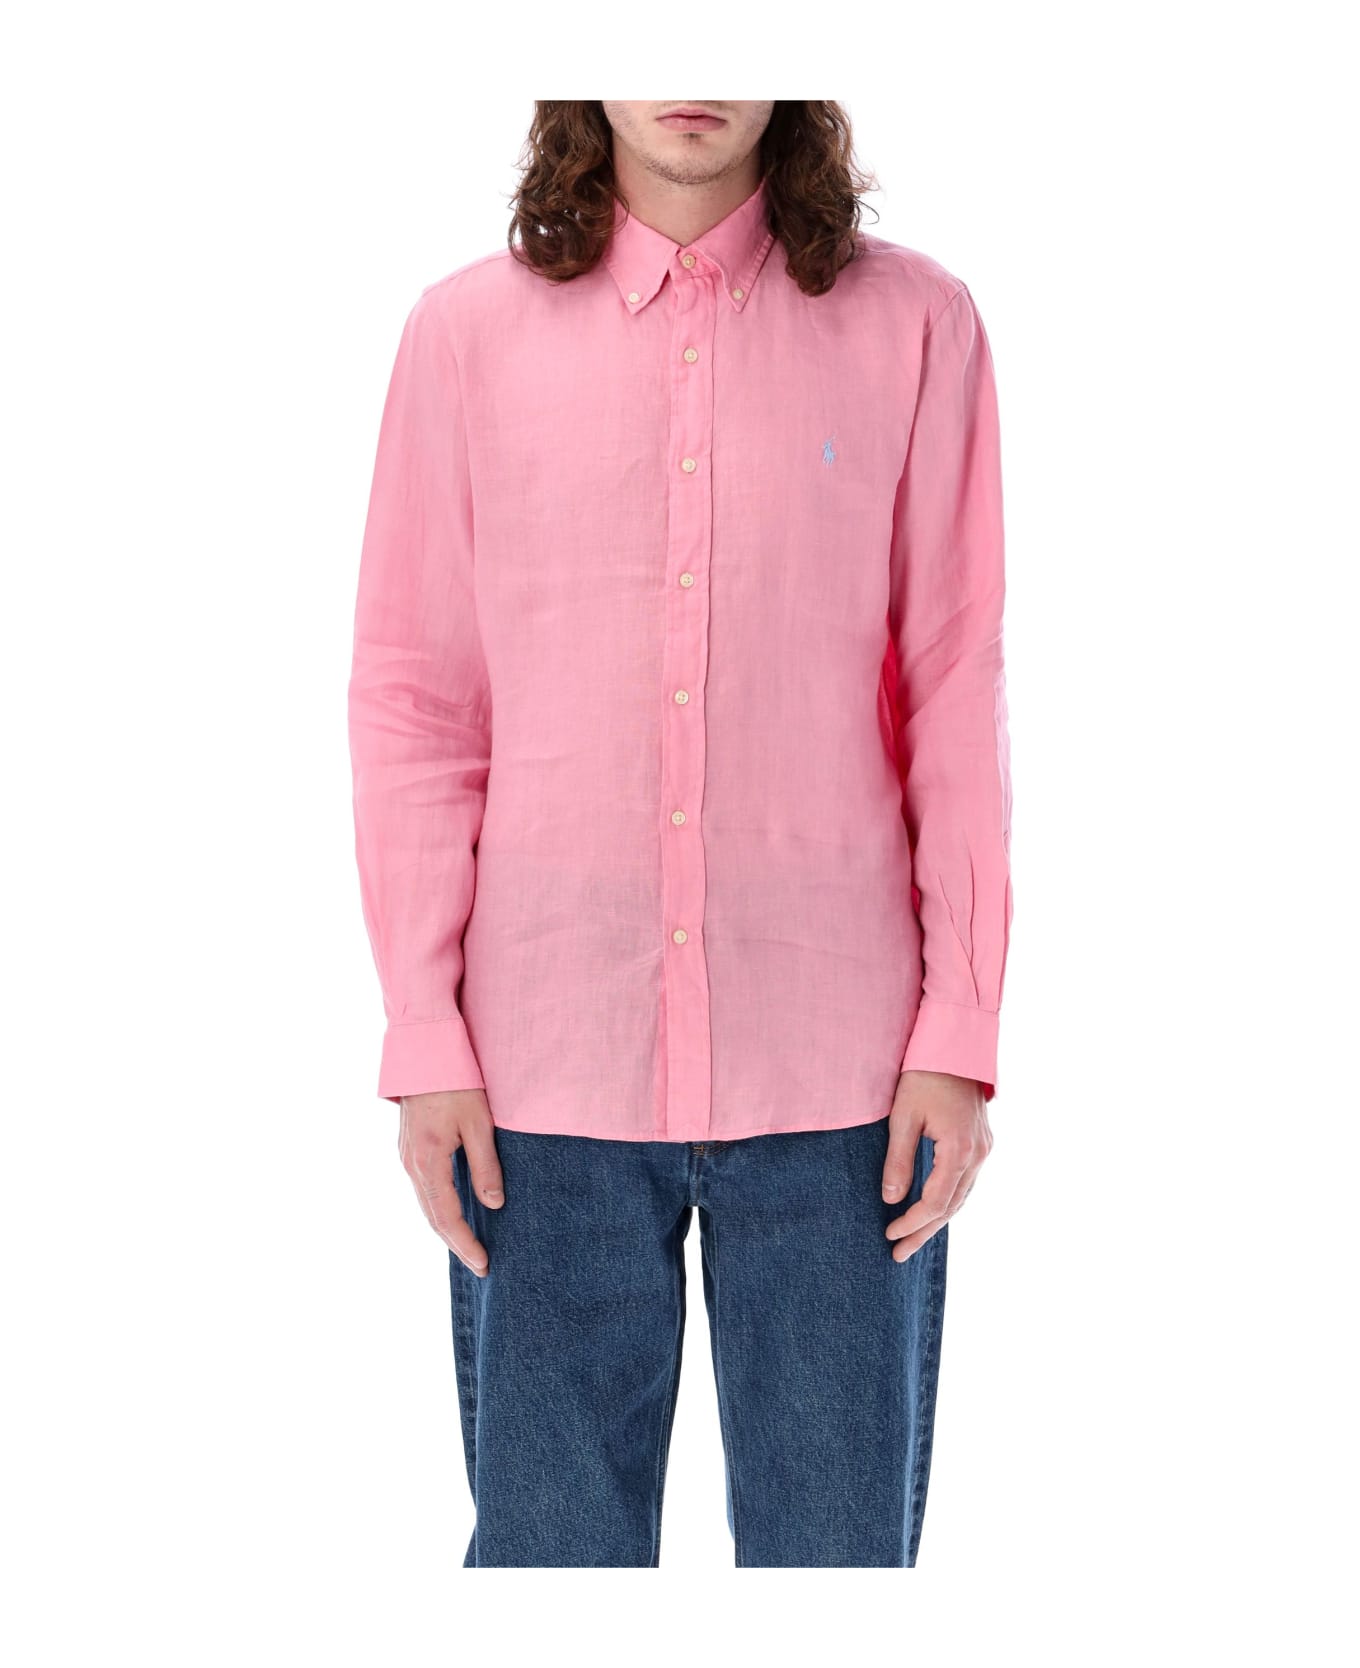 Ralph Lauren Custom Fit Shirt - Bright Pink シャツ